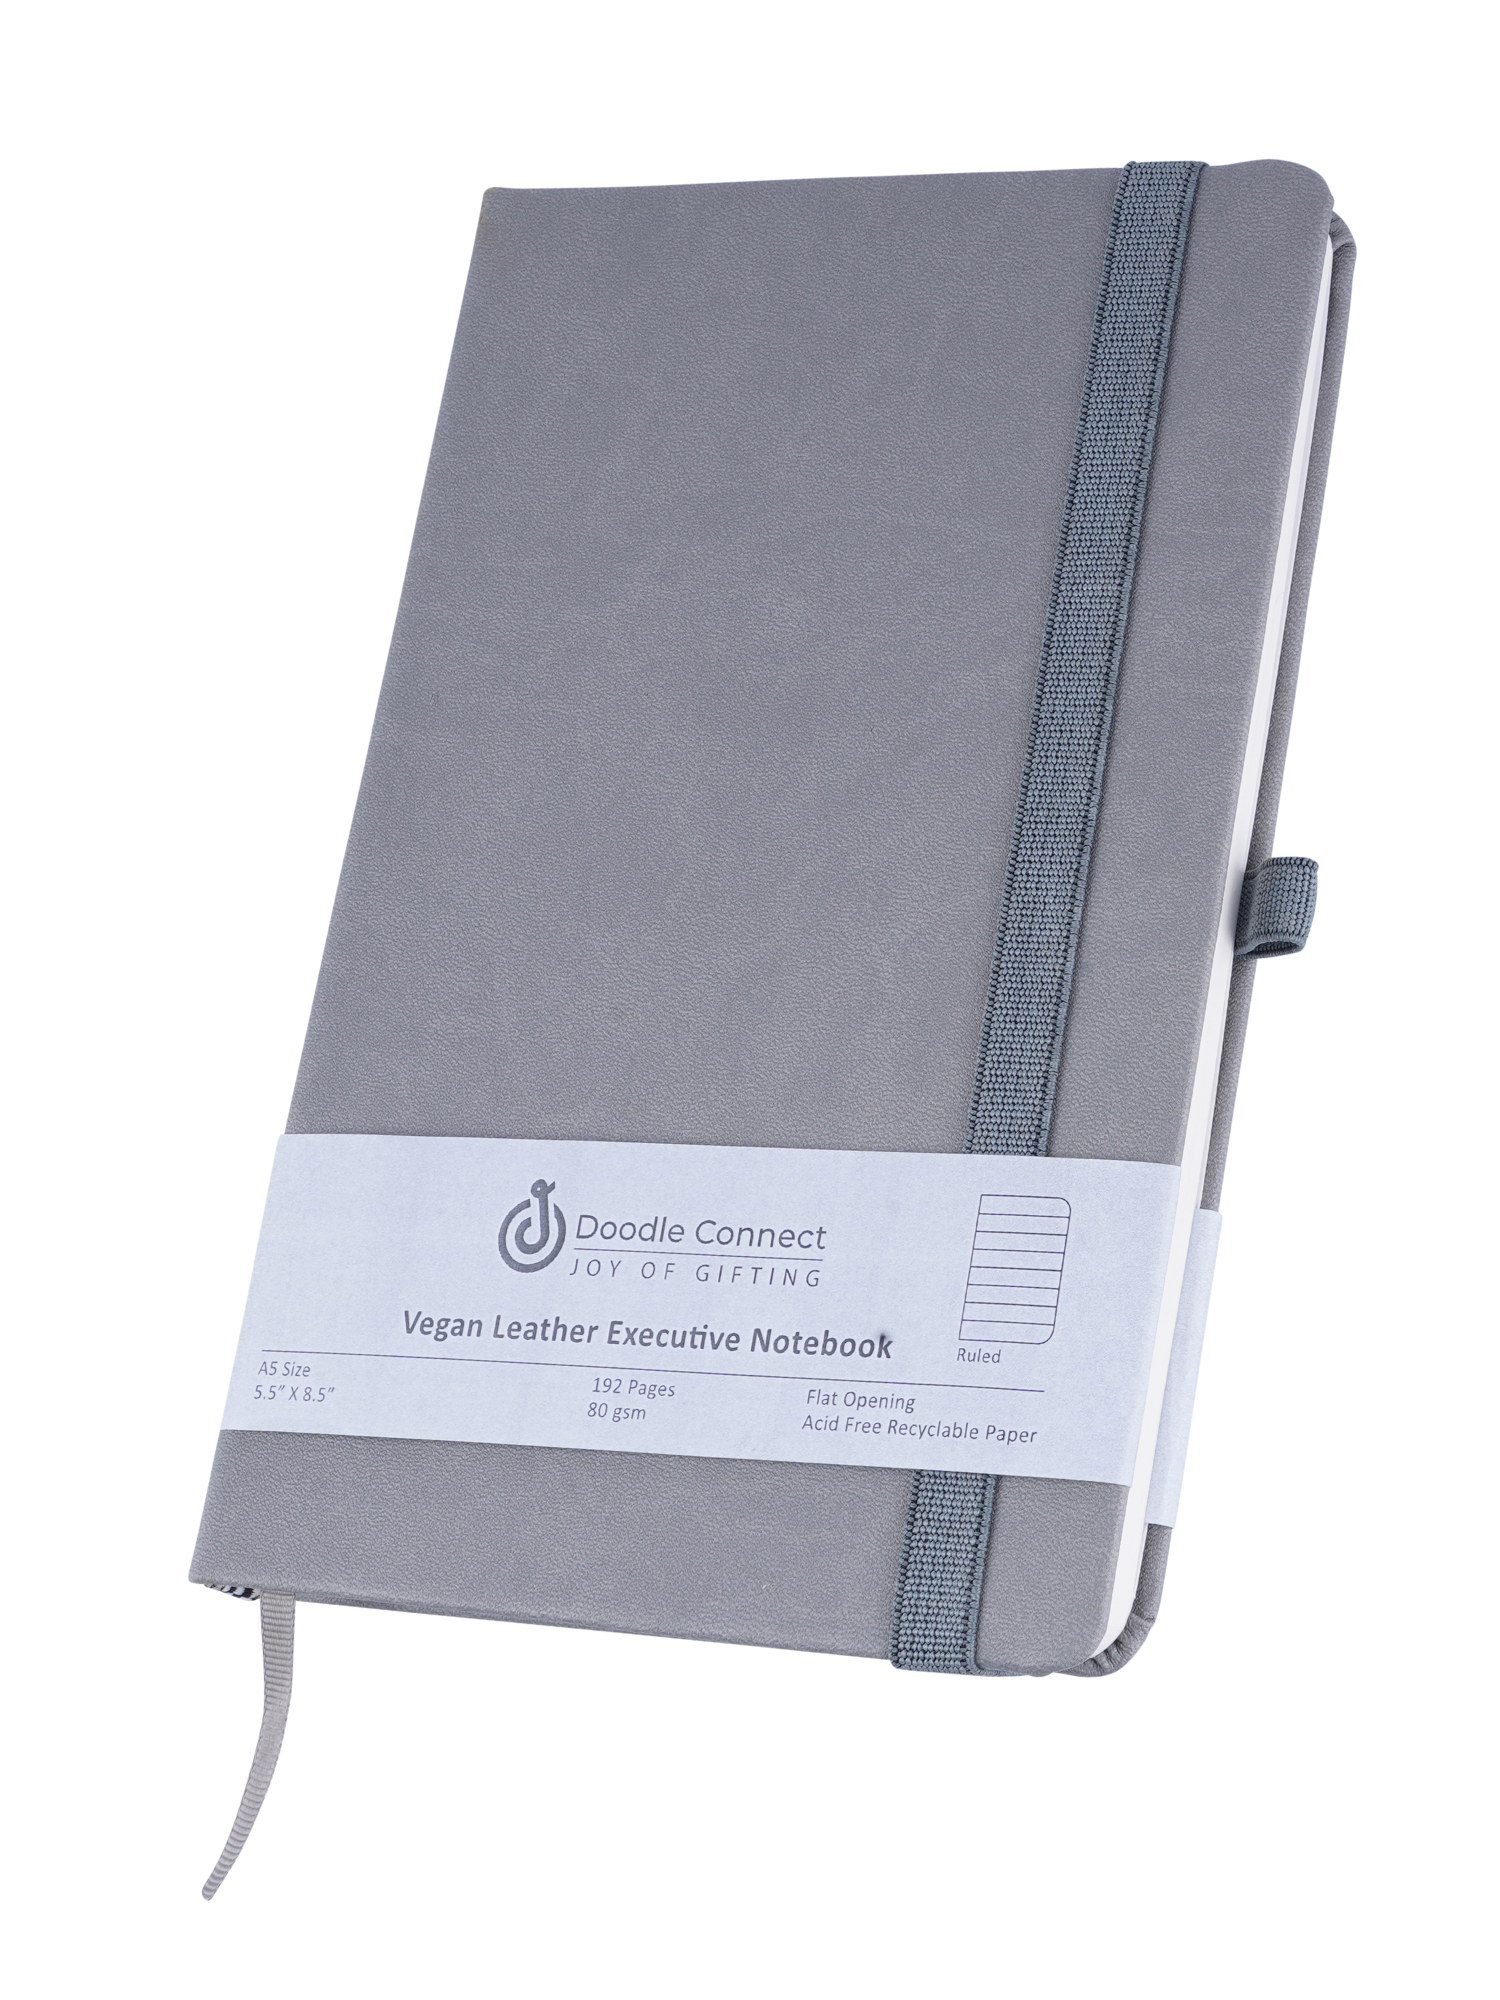 Apex Executive A5 PU Leather Hardbound Diary - Grey